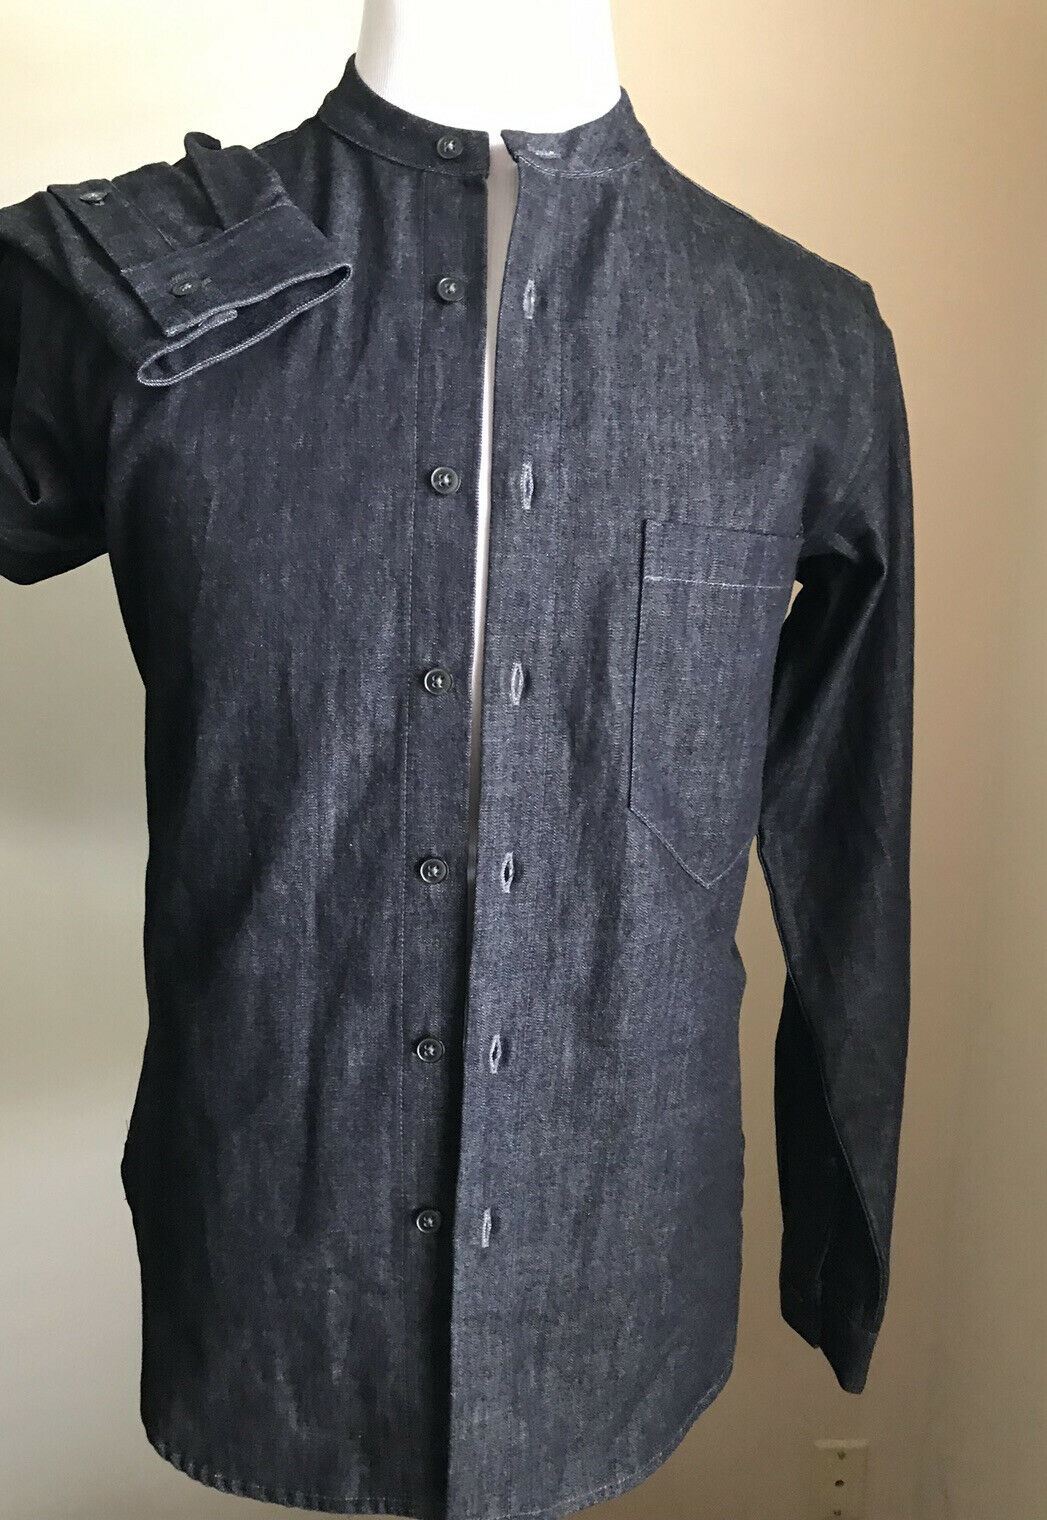 NWT $775 Giorgio Armani Mens Jeans Shirt DK Blue Denim S US ( 48 Eu ) Japan